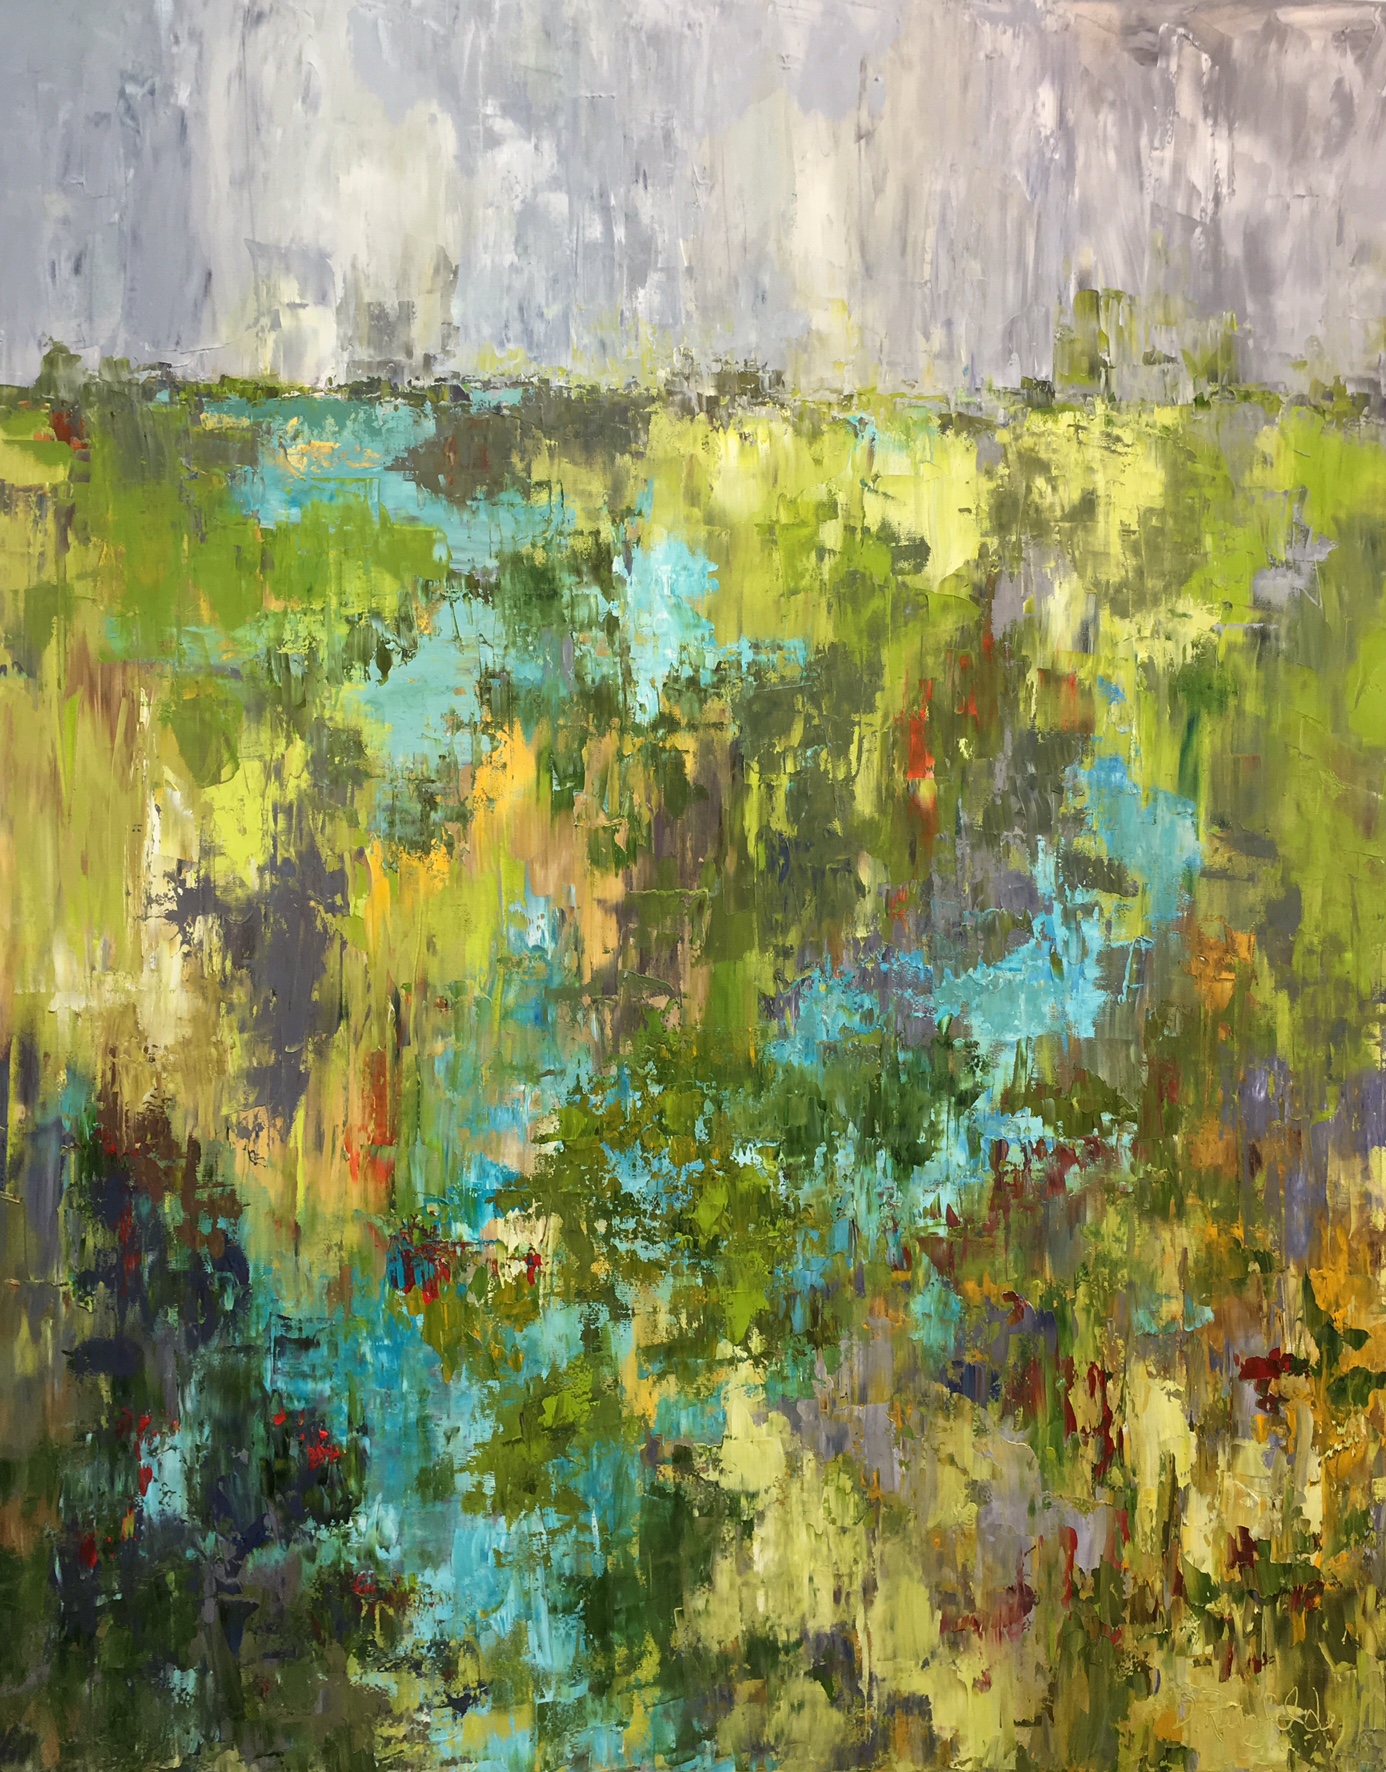 Finding Joy, oil on canvas, 60x48" $3600